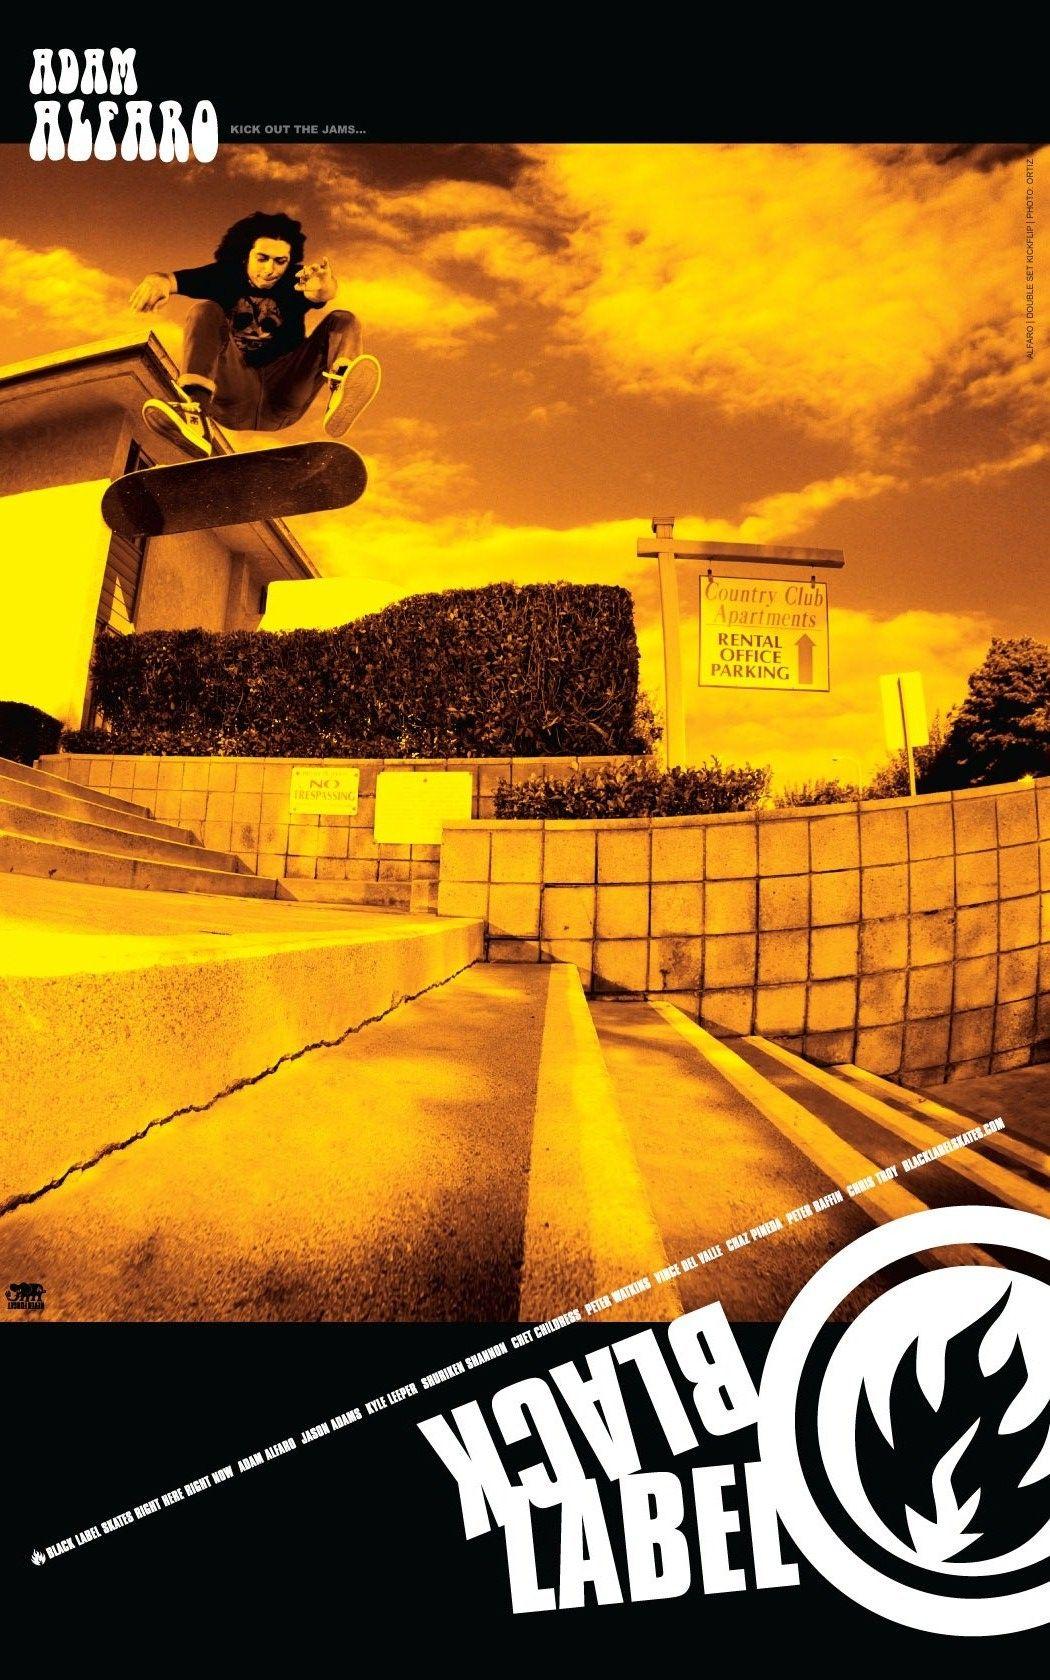 Black Label. Skateboarding wallpaper, skateboard wallpaper, sk8 walls